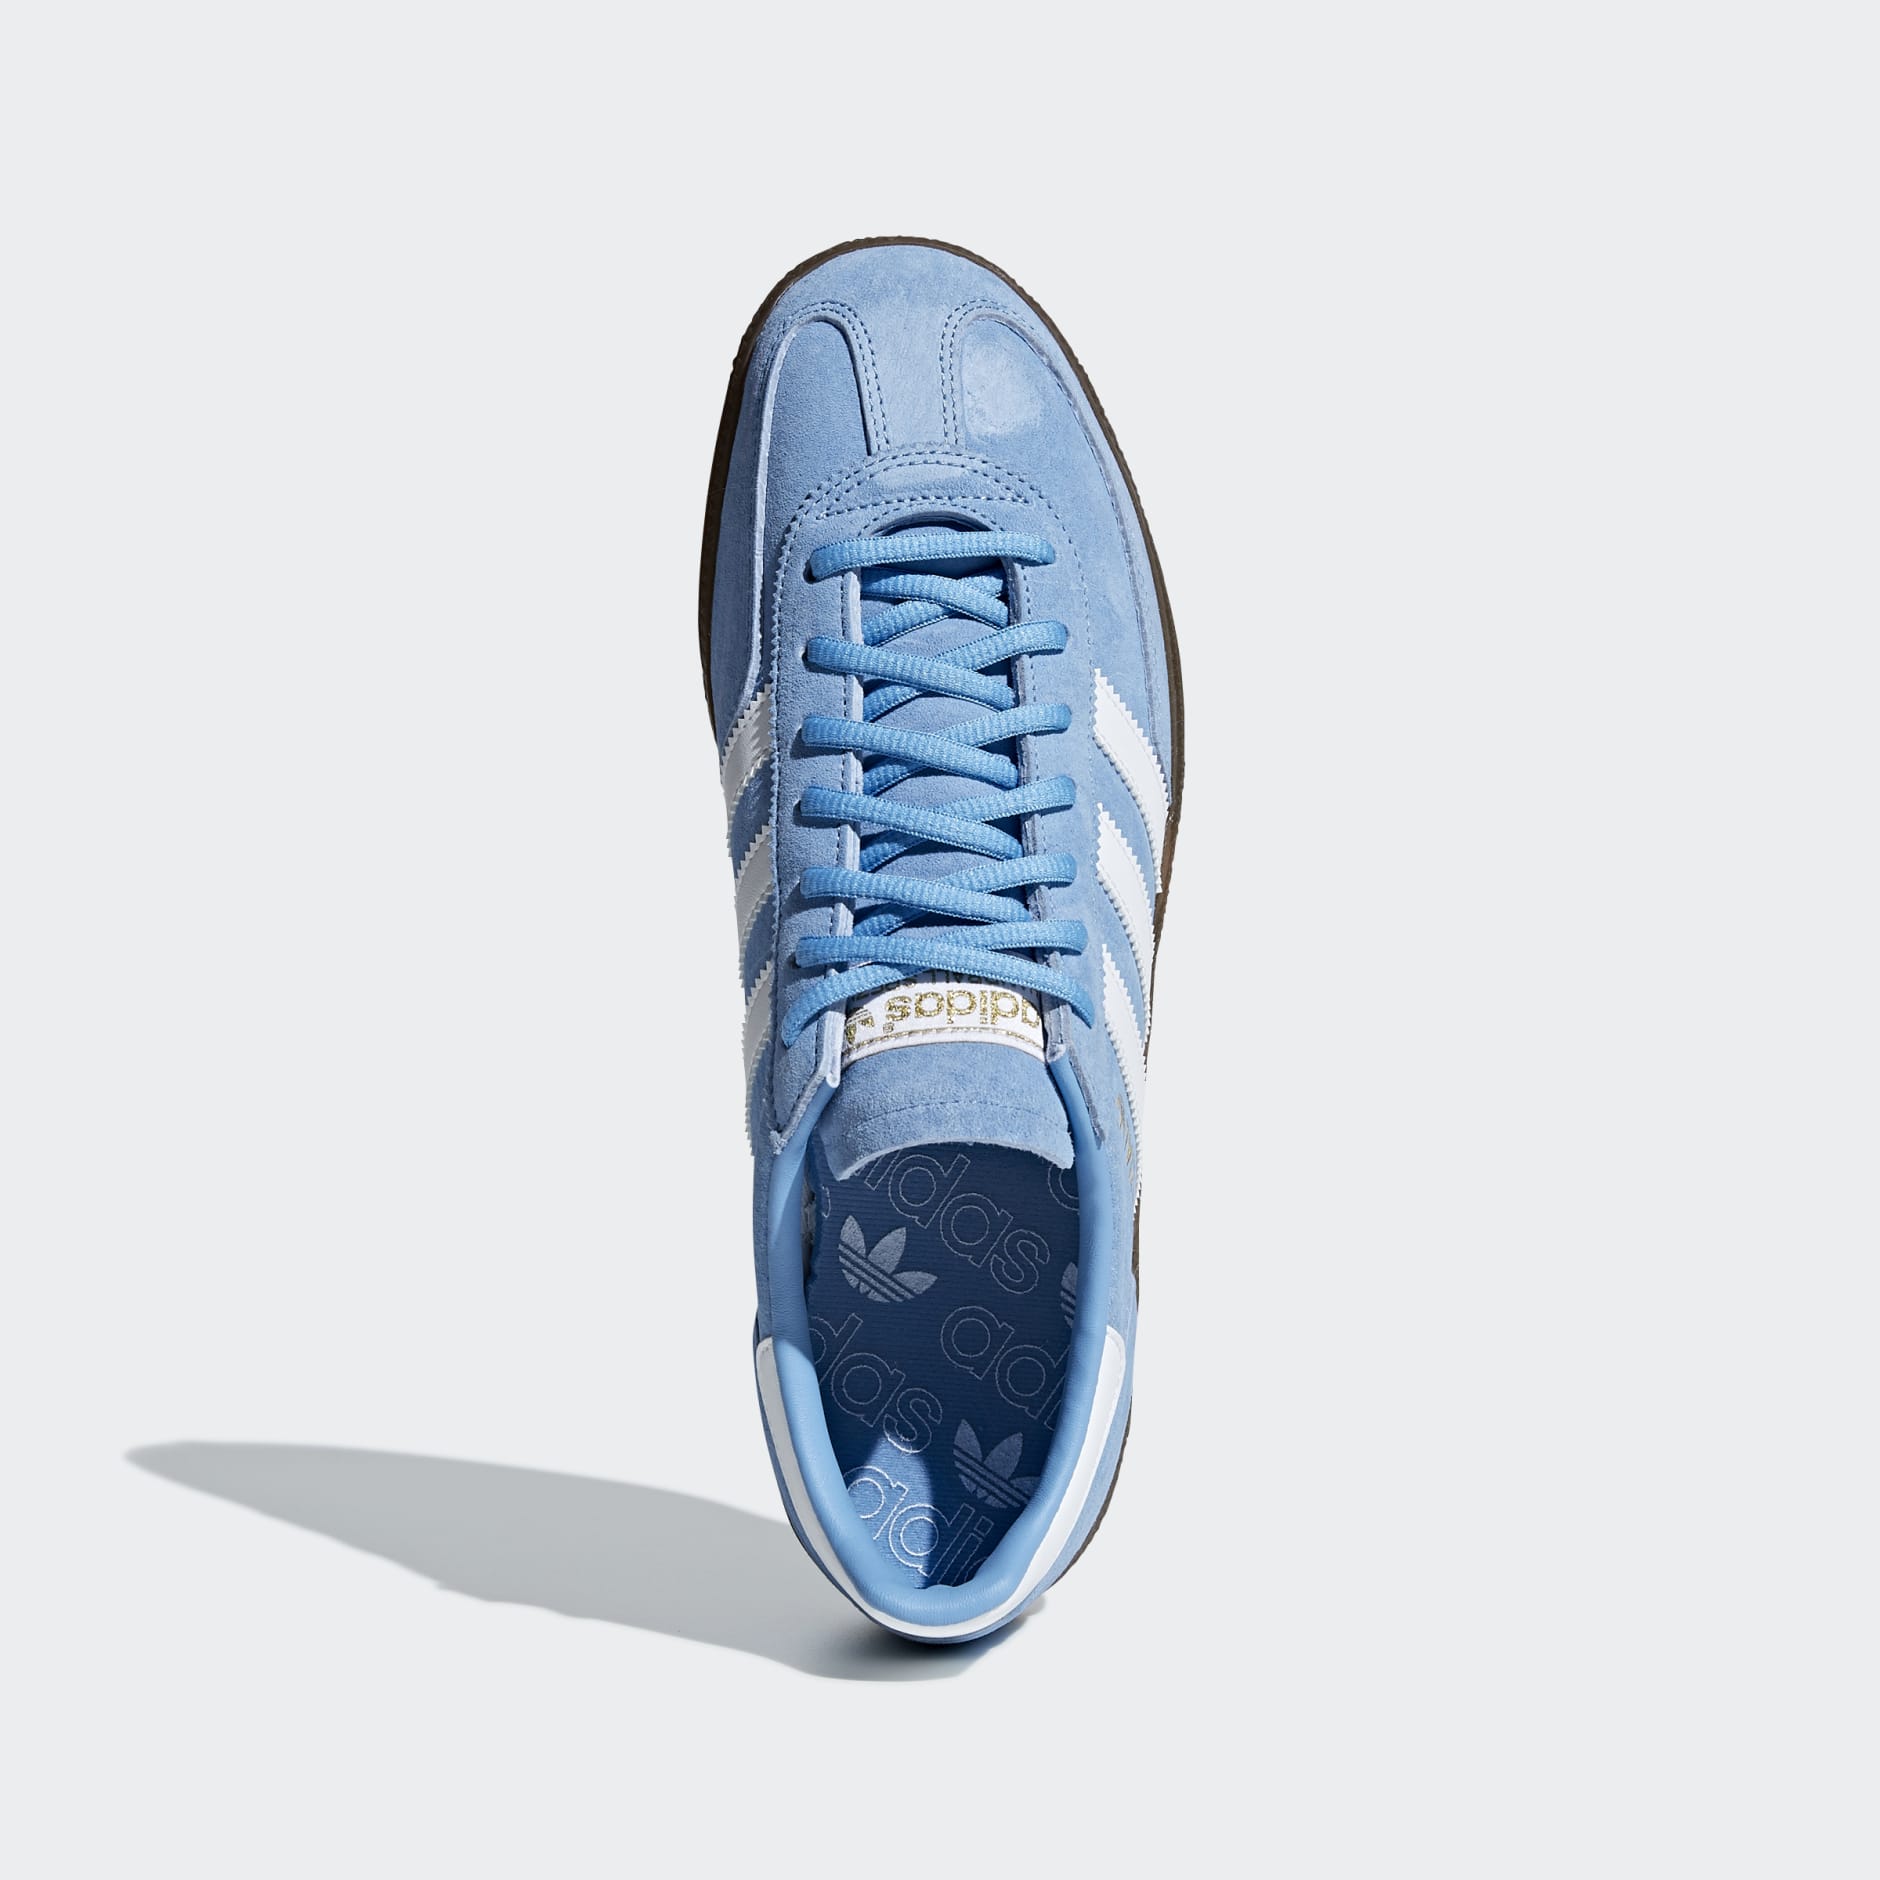 Adidas Original Handball Spezial Mens Shoes Trainers UK Size 8-12 BD7632  BNIB 